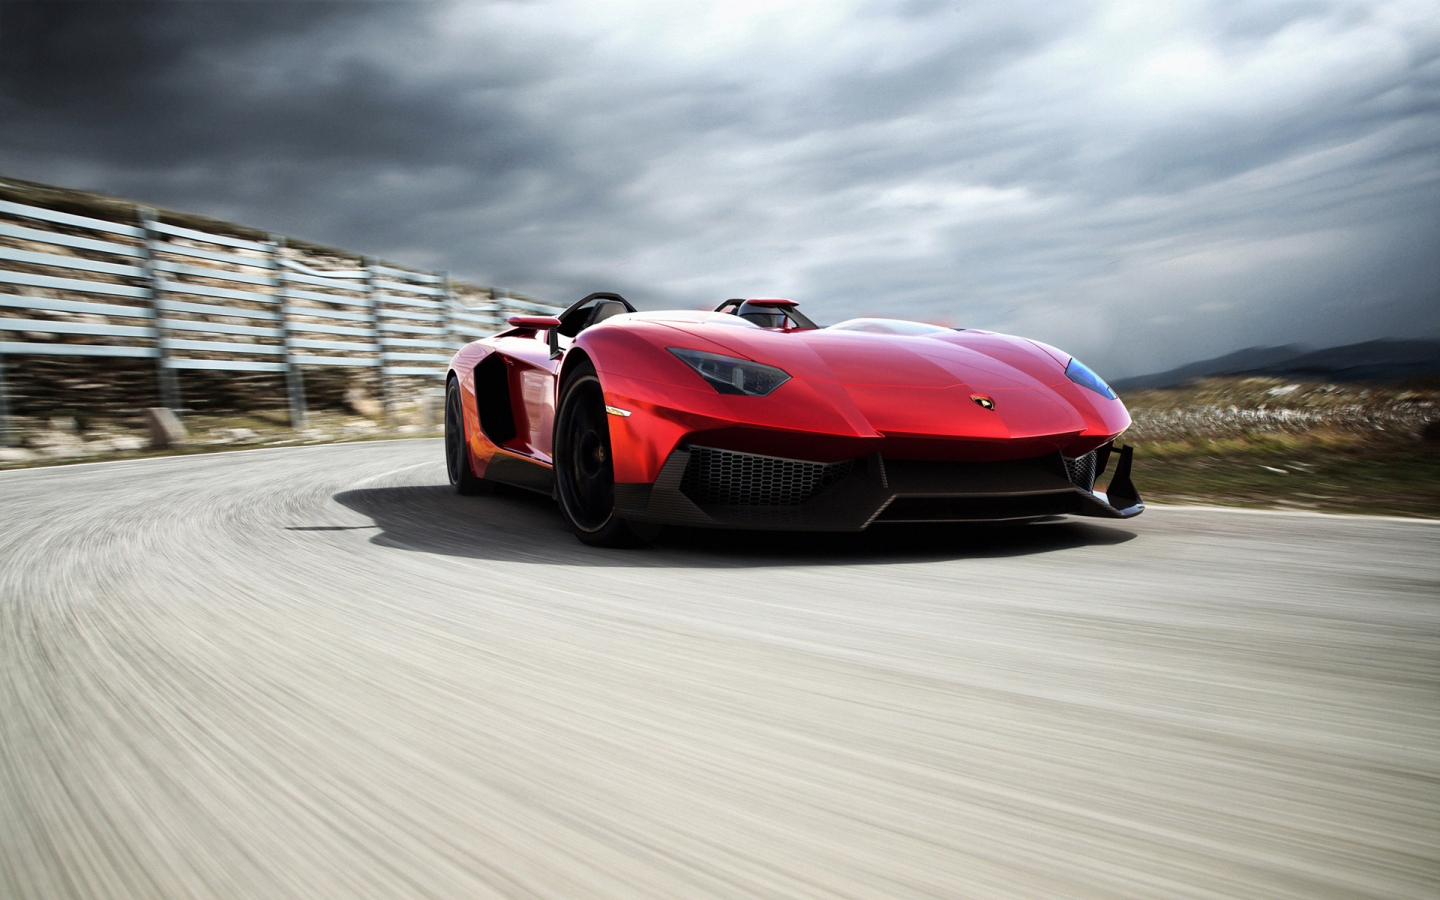 2012 Lamborghini Aventador J Speed for 1440 x 900 widescreen resolution